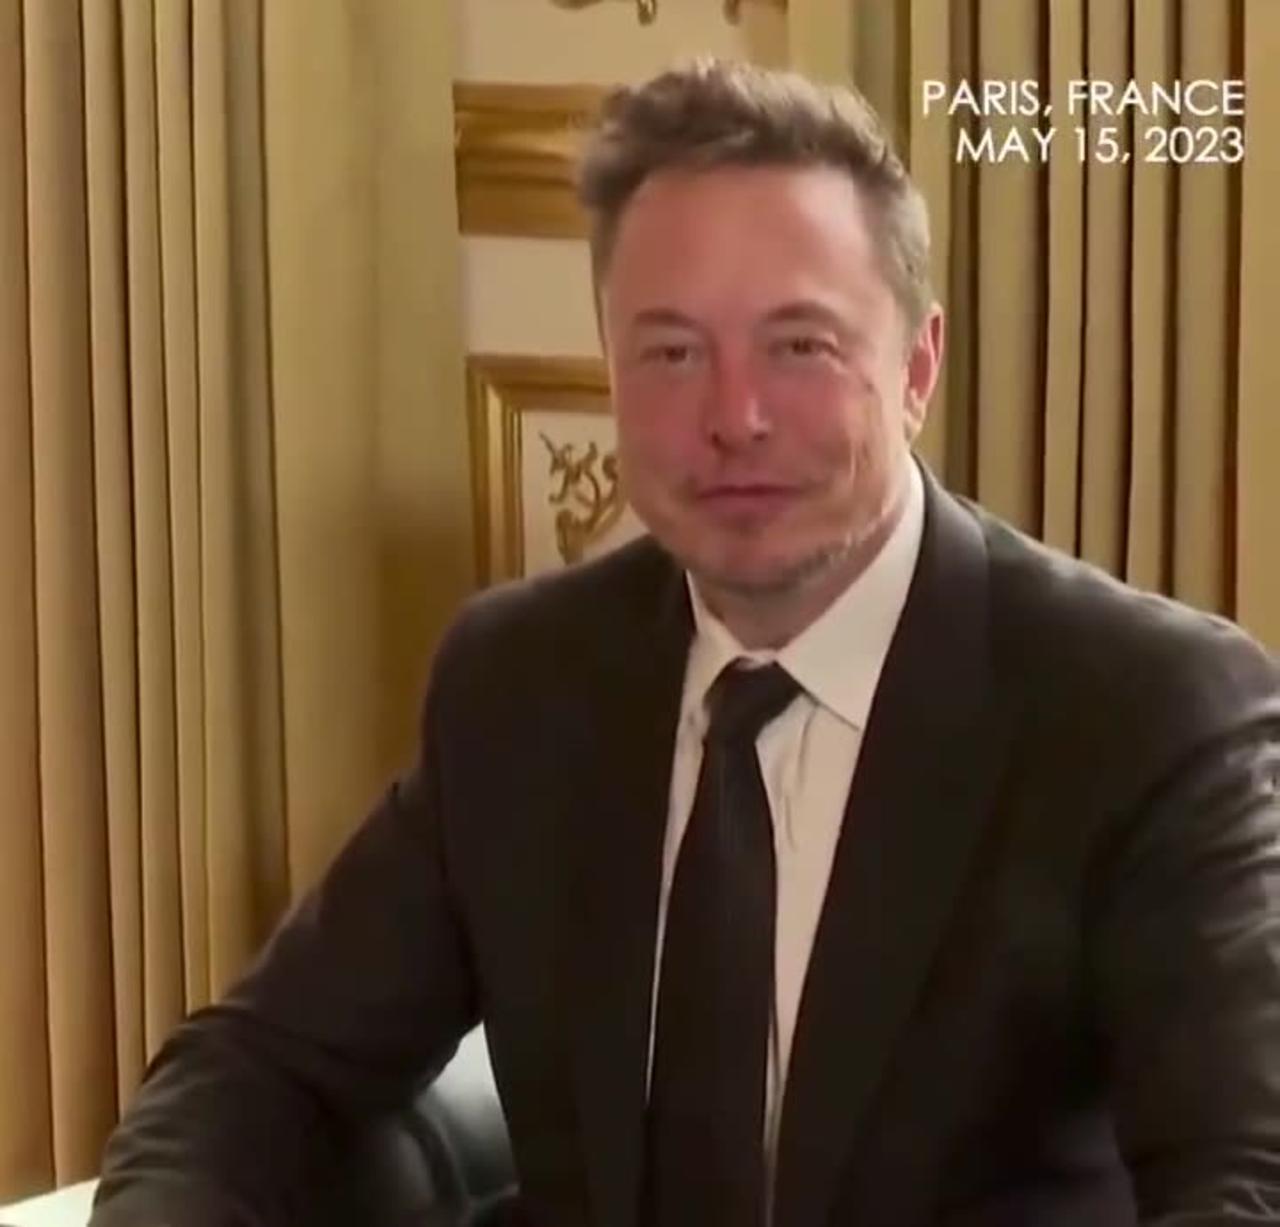 Macron met Elon Musk at the Elysee Palace